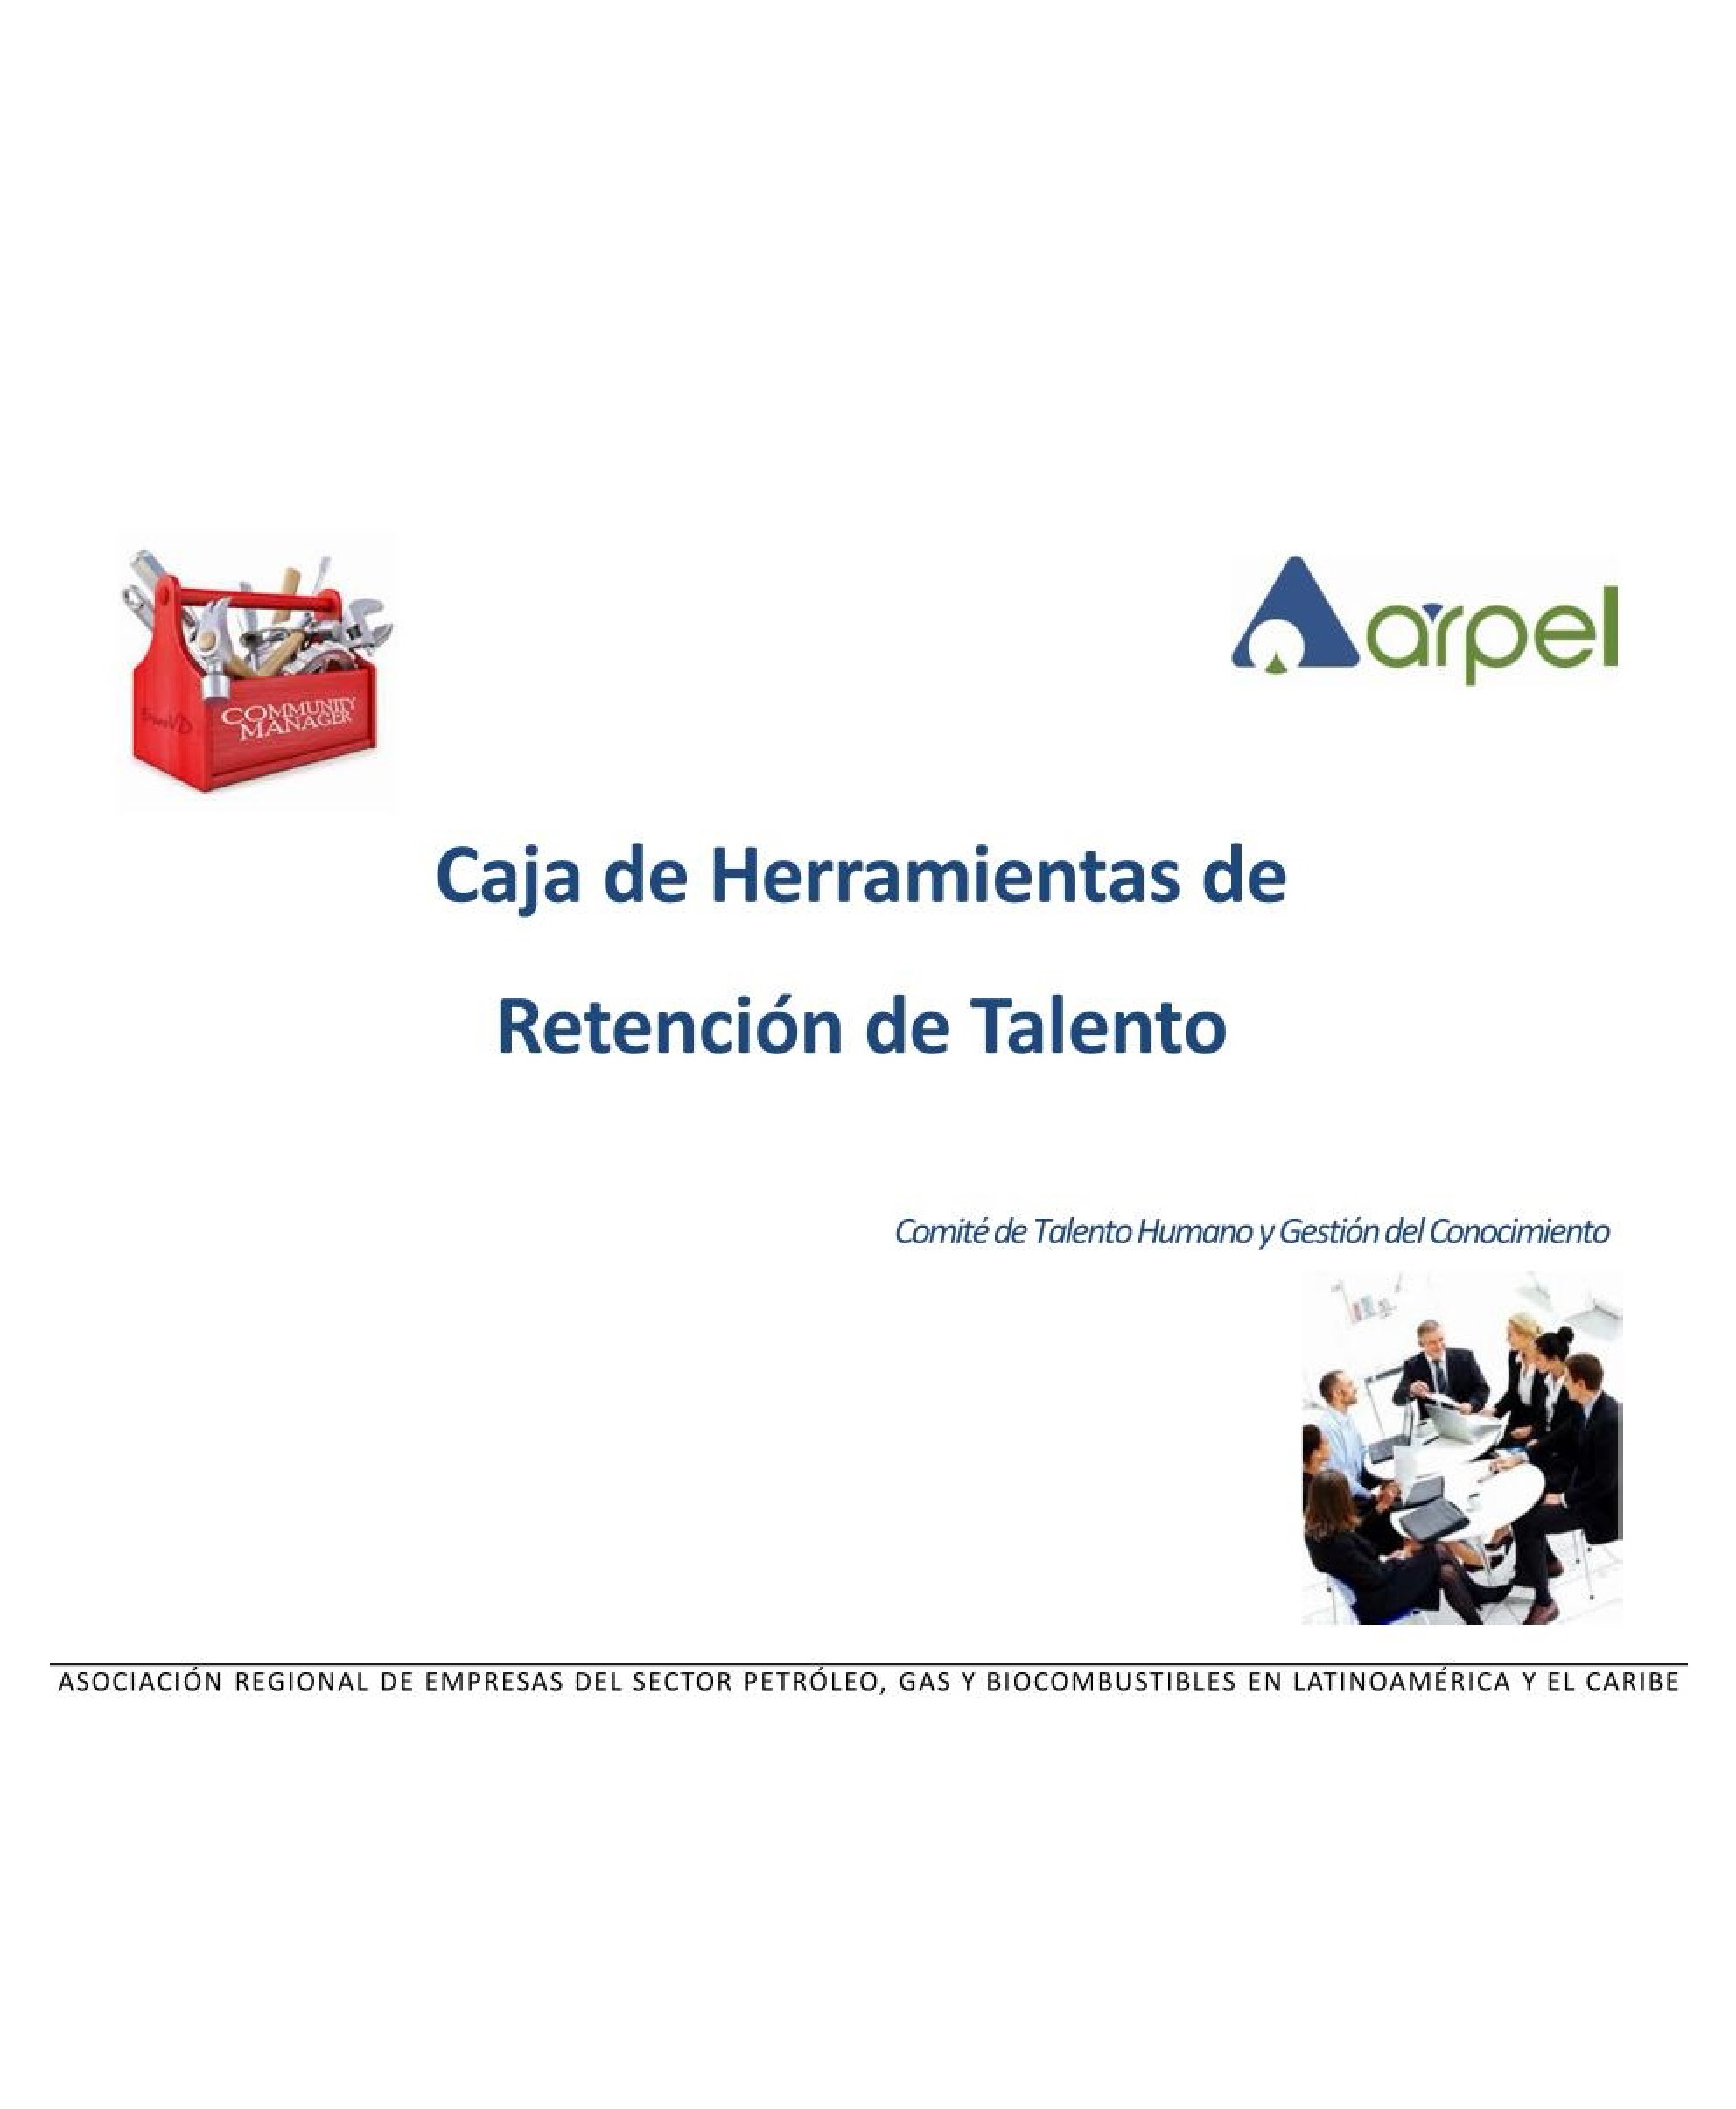 Talent Retention Toolkit